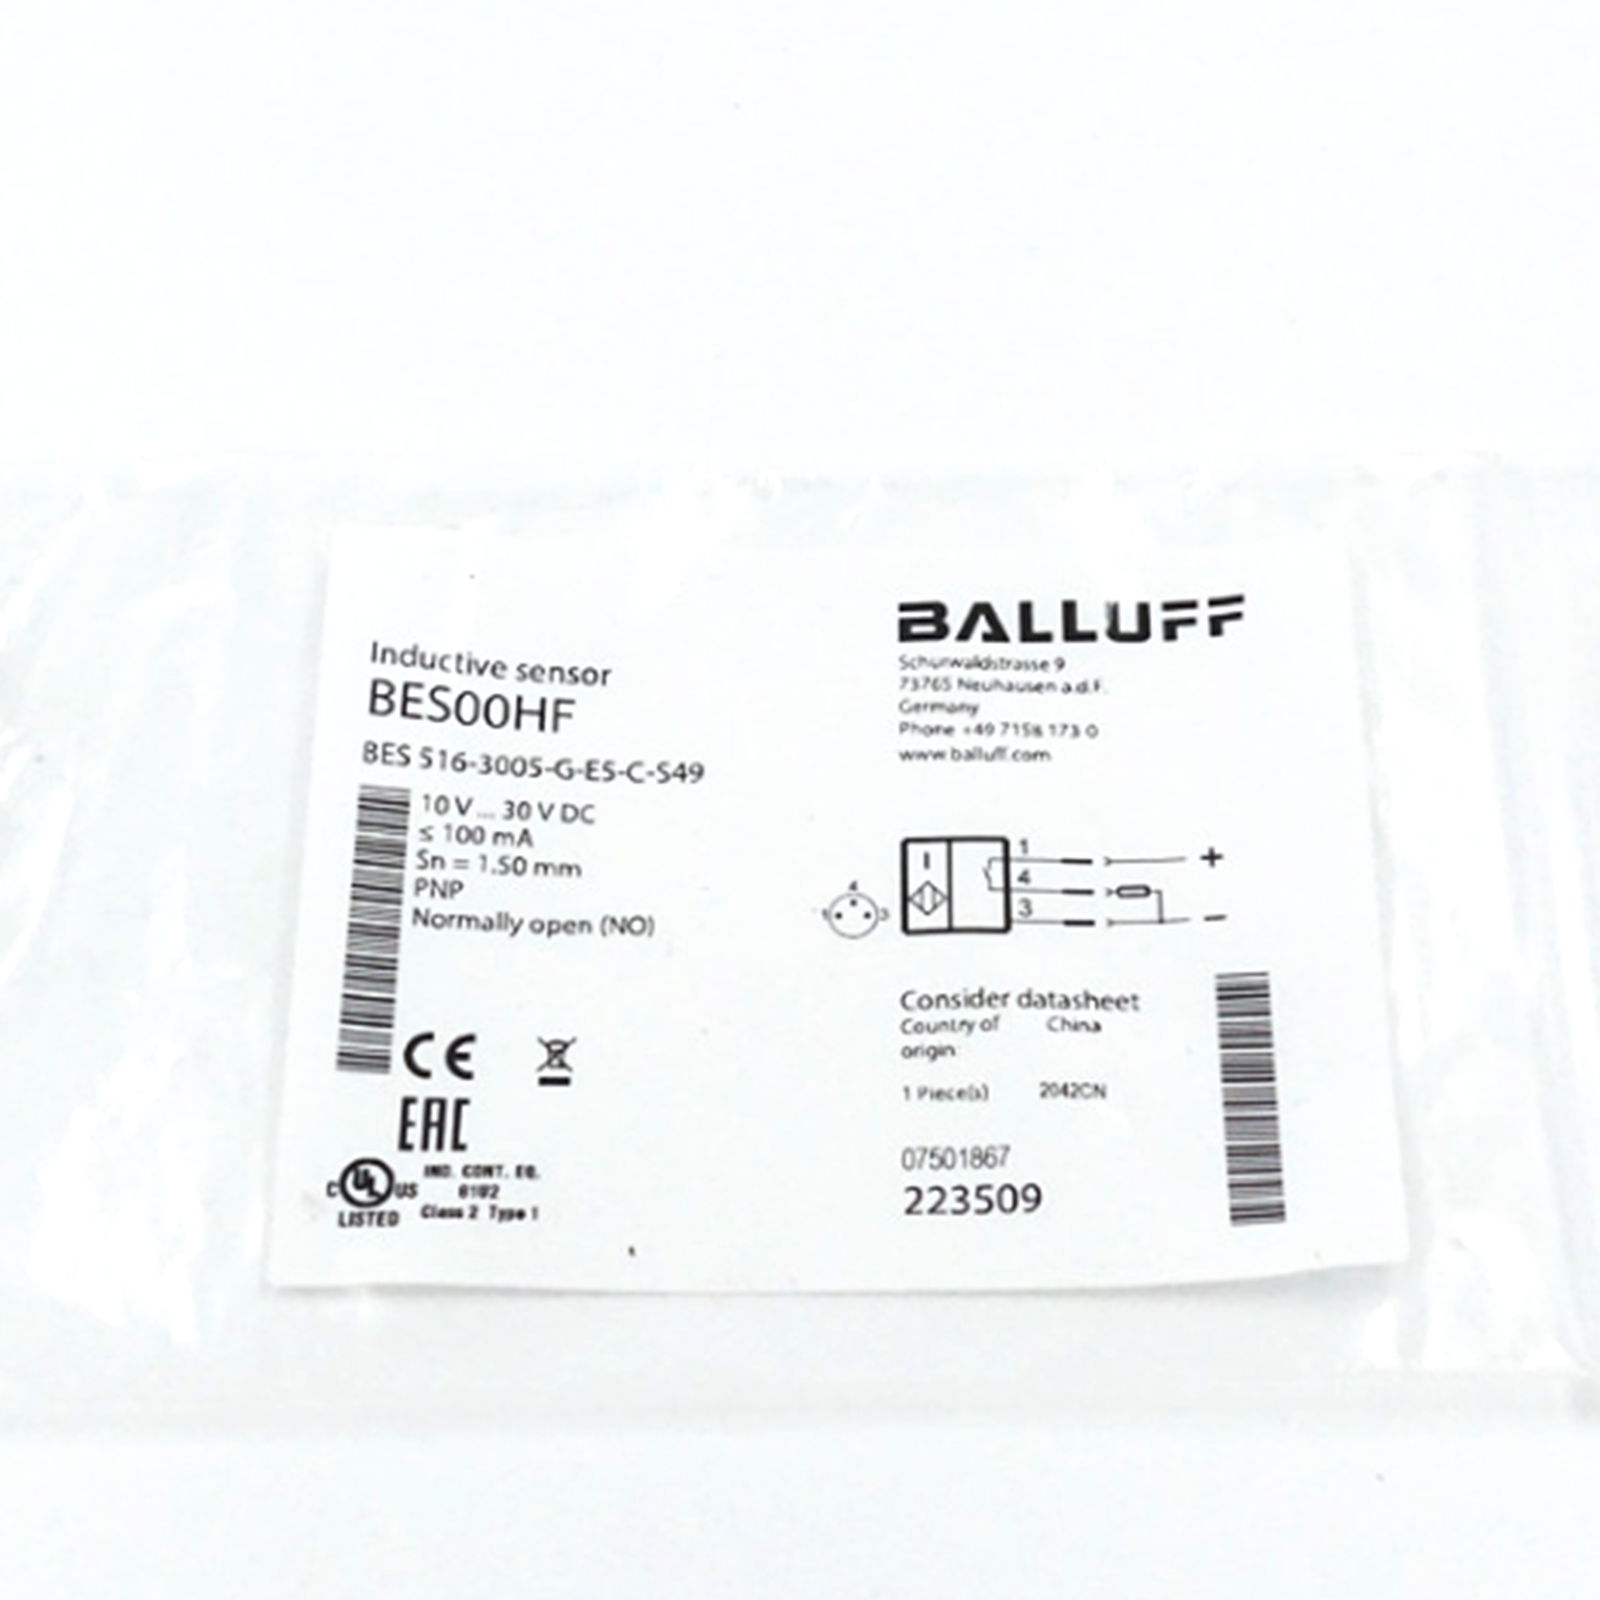 BALLUFF BES 516-3005-G-E5-C-S49 516-3005-G-E5-C-S49 Inductive Sensor